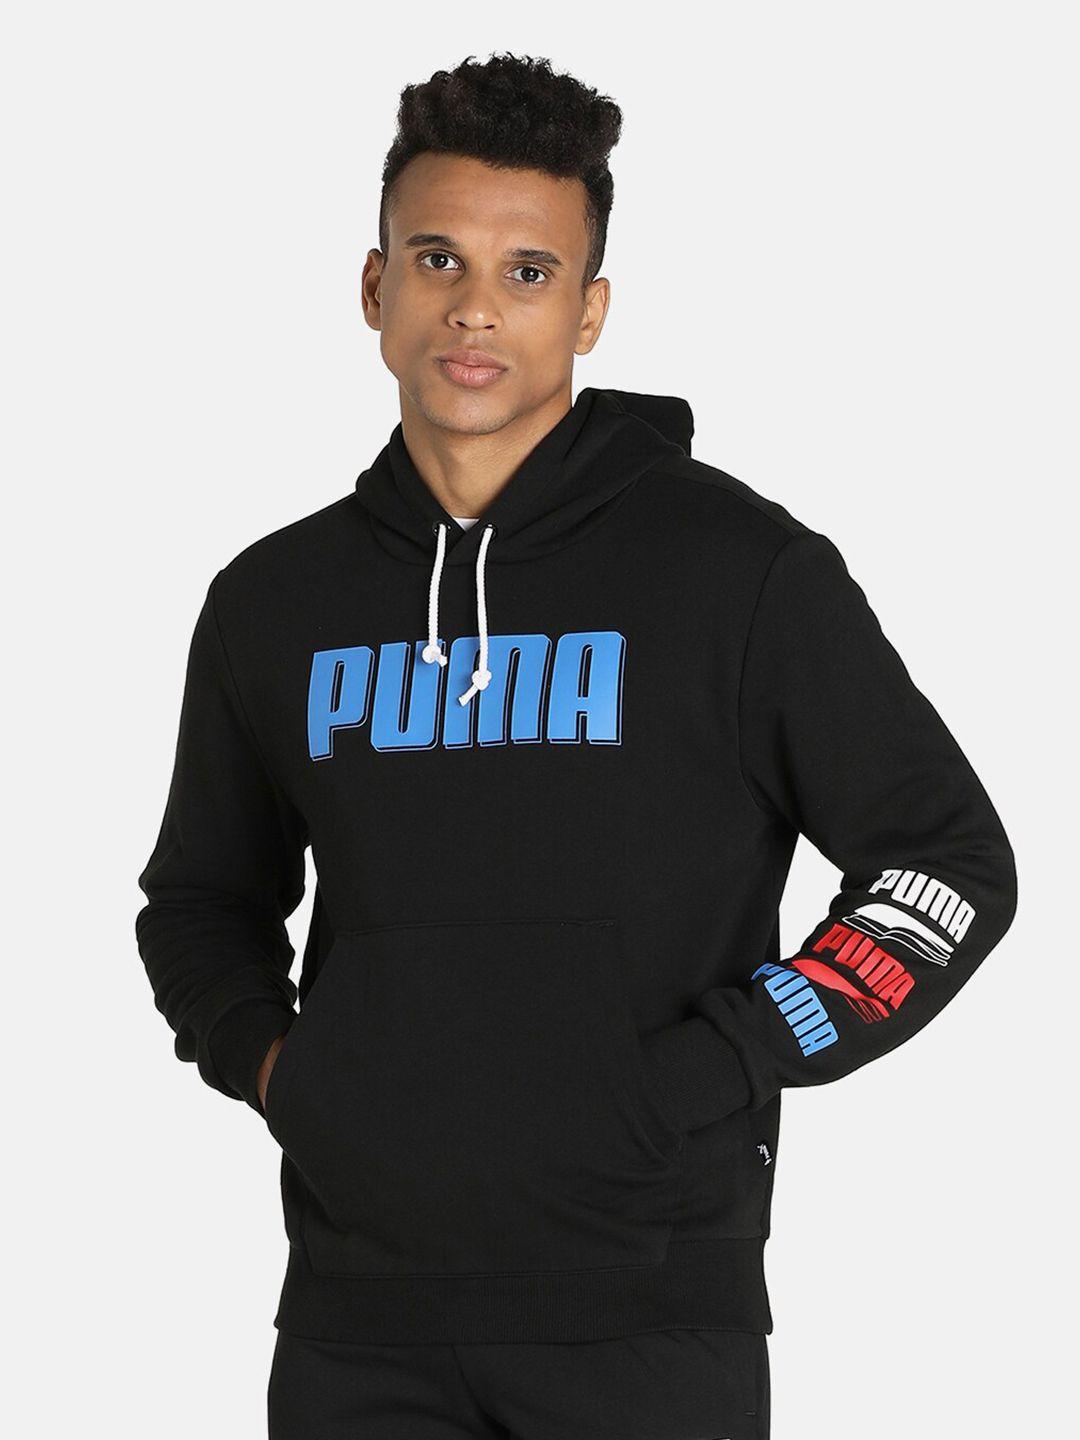 puma-men-black-&-blue-brand-logo-printed-cotton-rebel-bold-hooded-sweatshirts